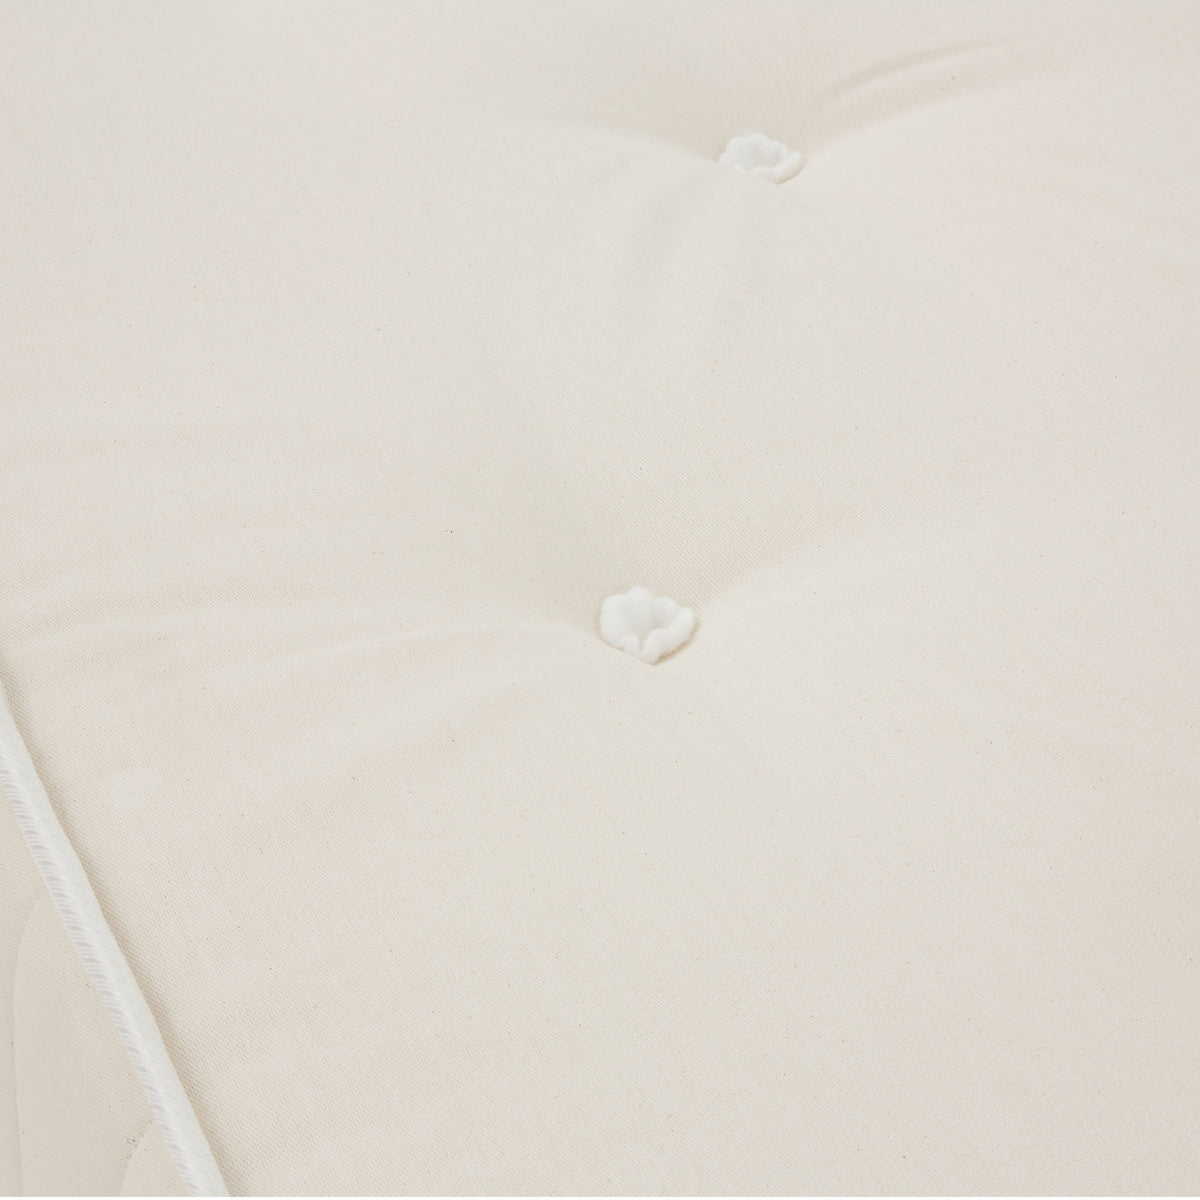 Roseland Sleep Classic Open Coil Mattress close up of cotton tuft